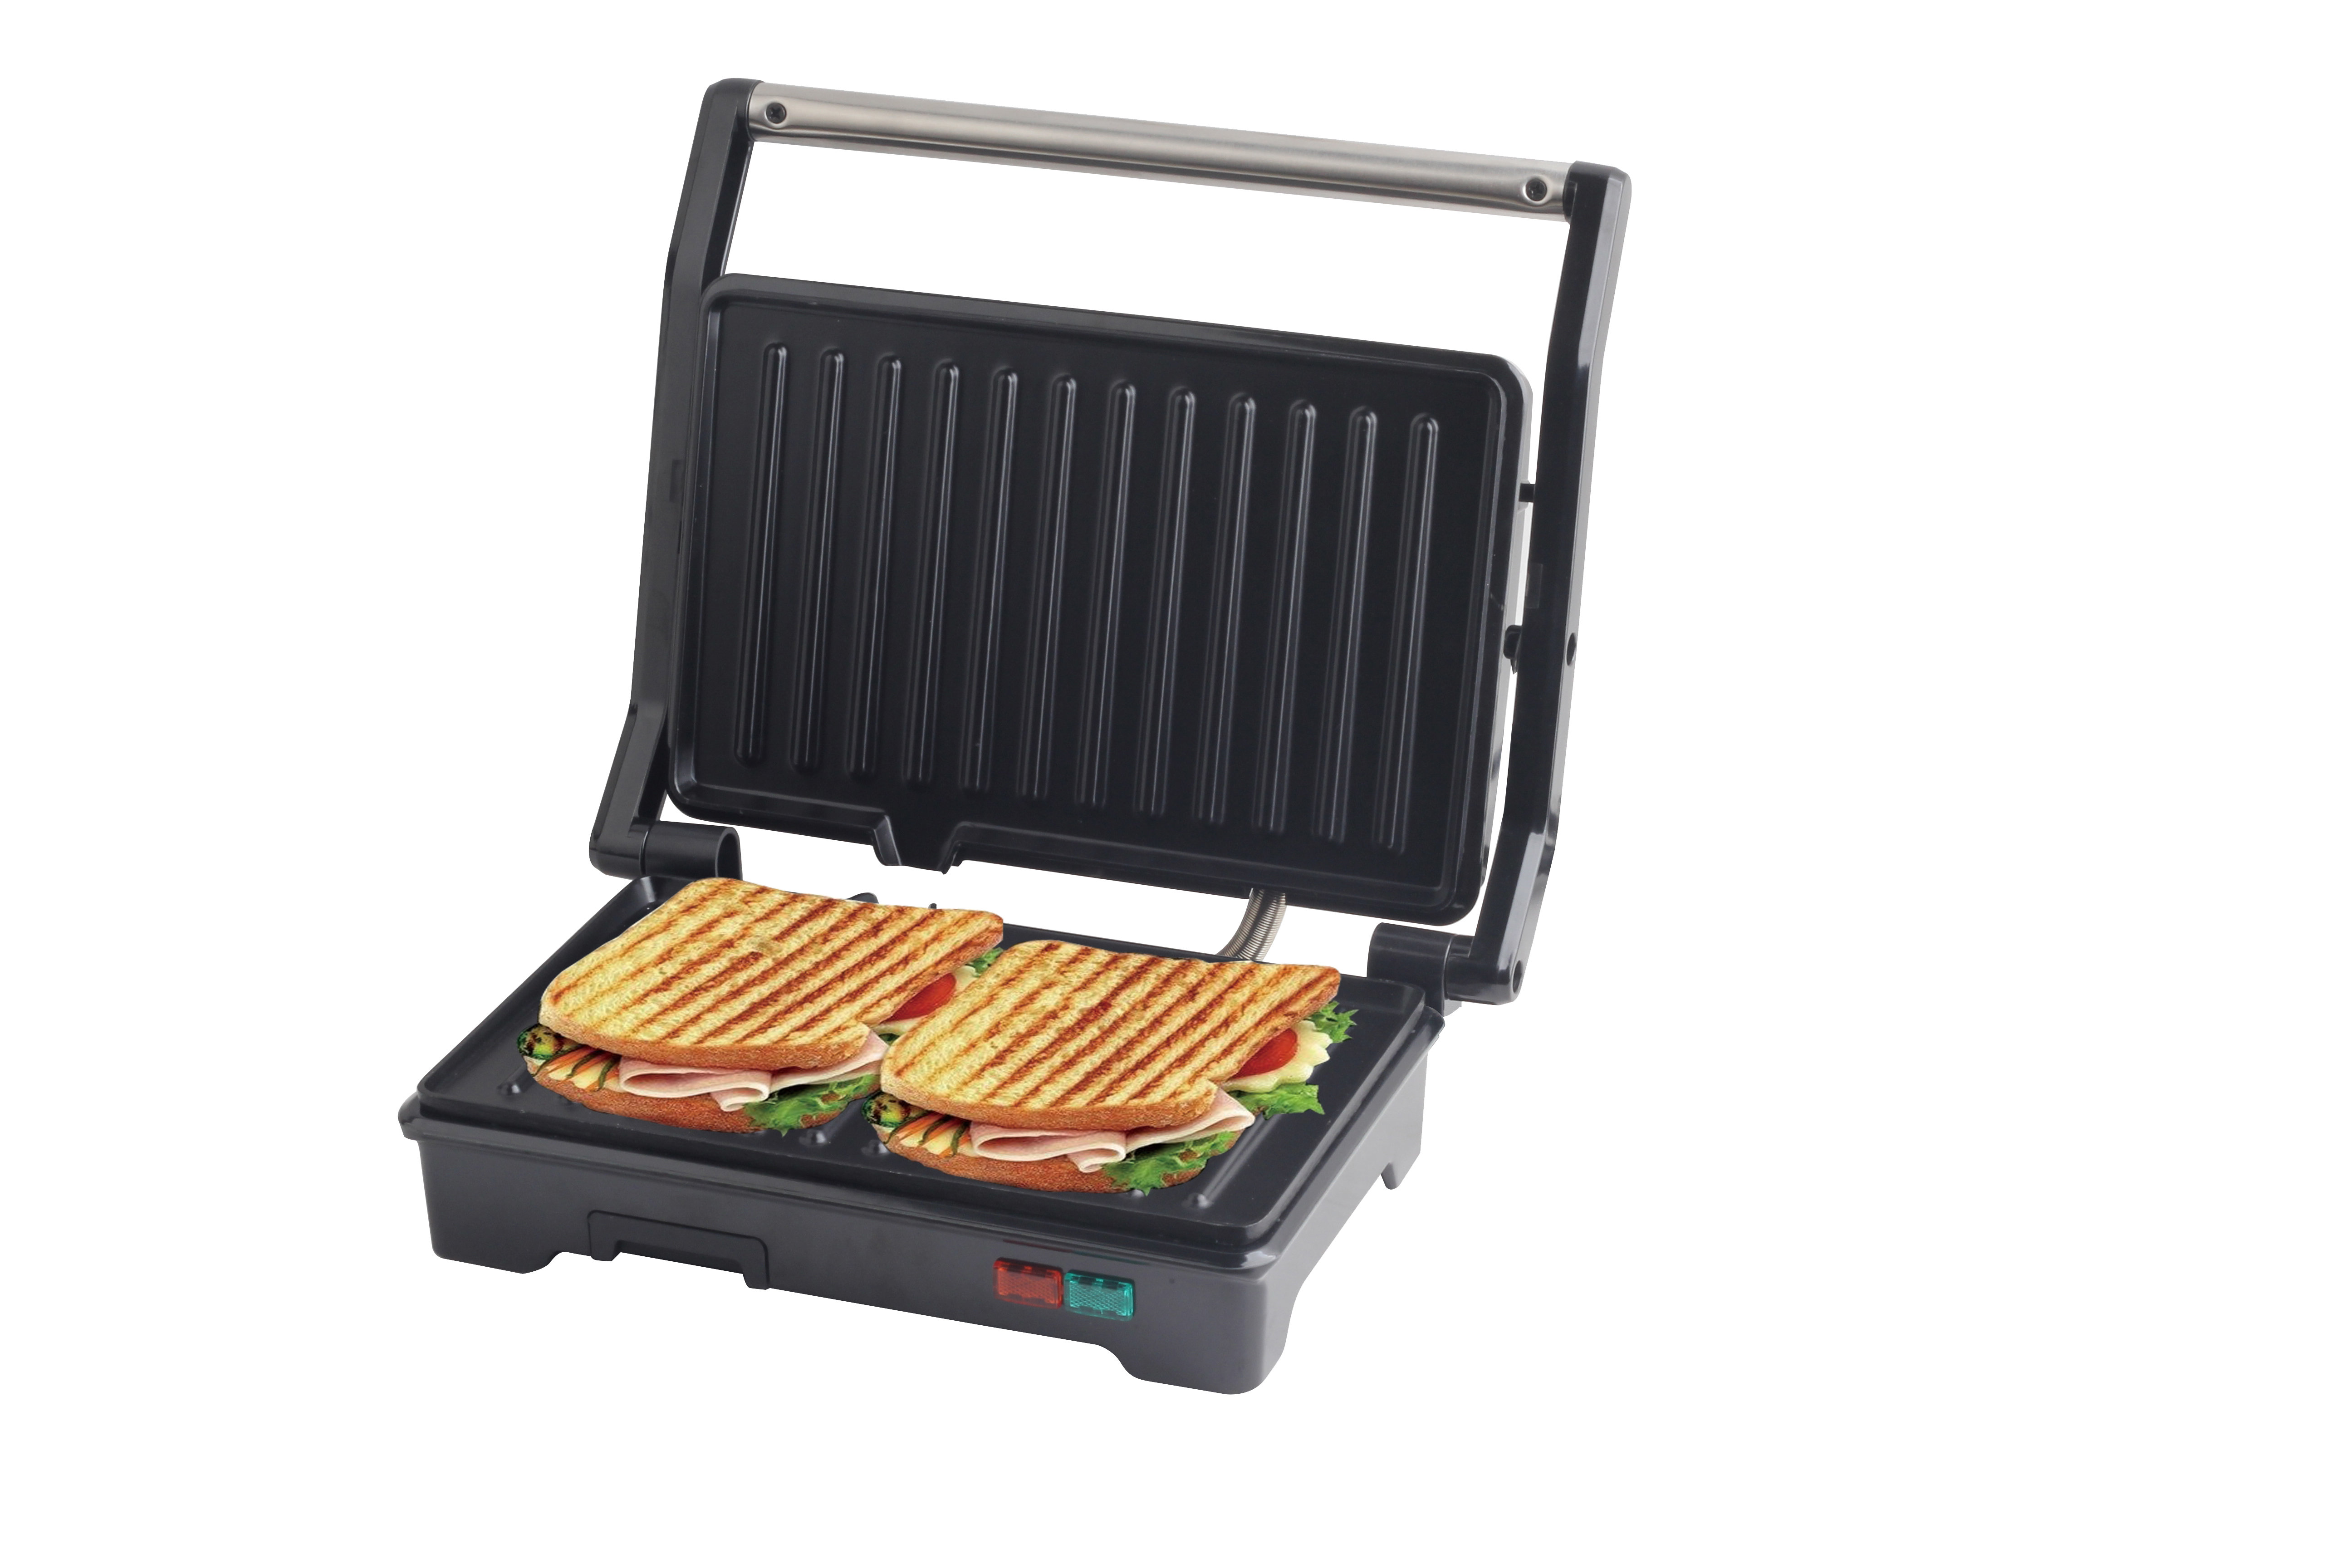 SOKANY Electric Panini Press Sandwich Maker Grill with Nonstick Grids, Medium, Chrome Finish